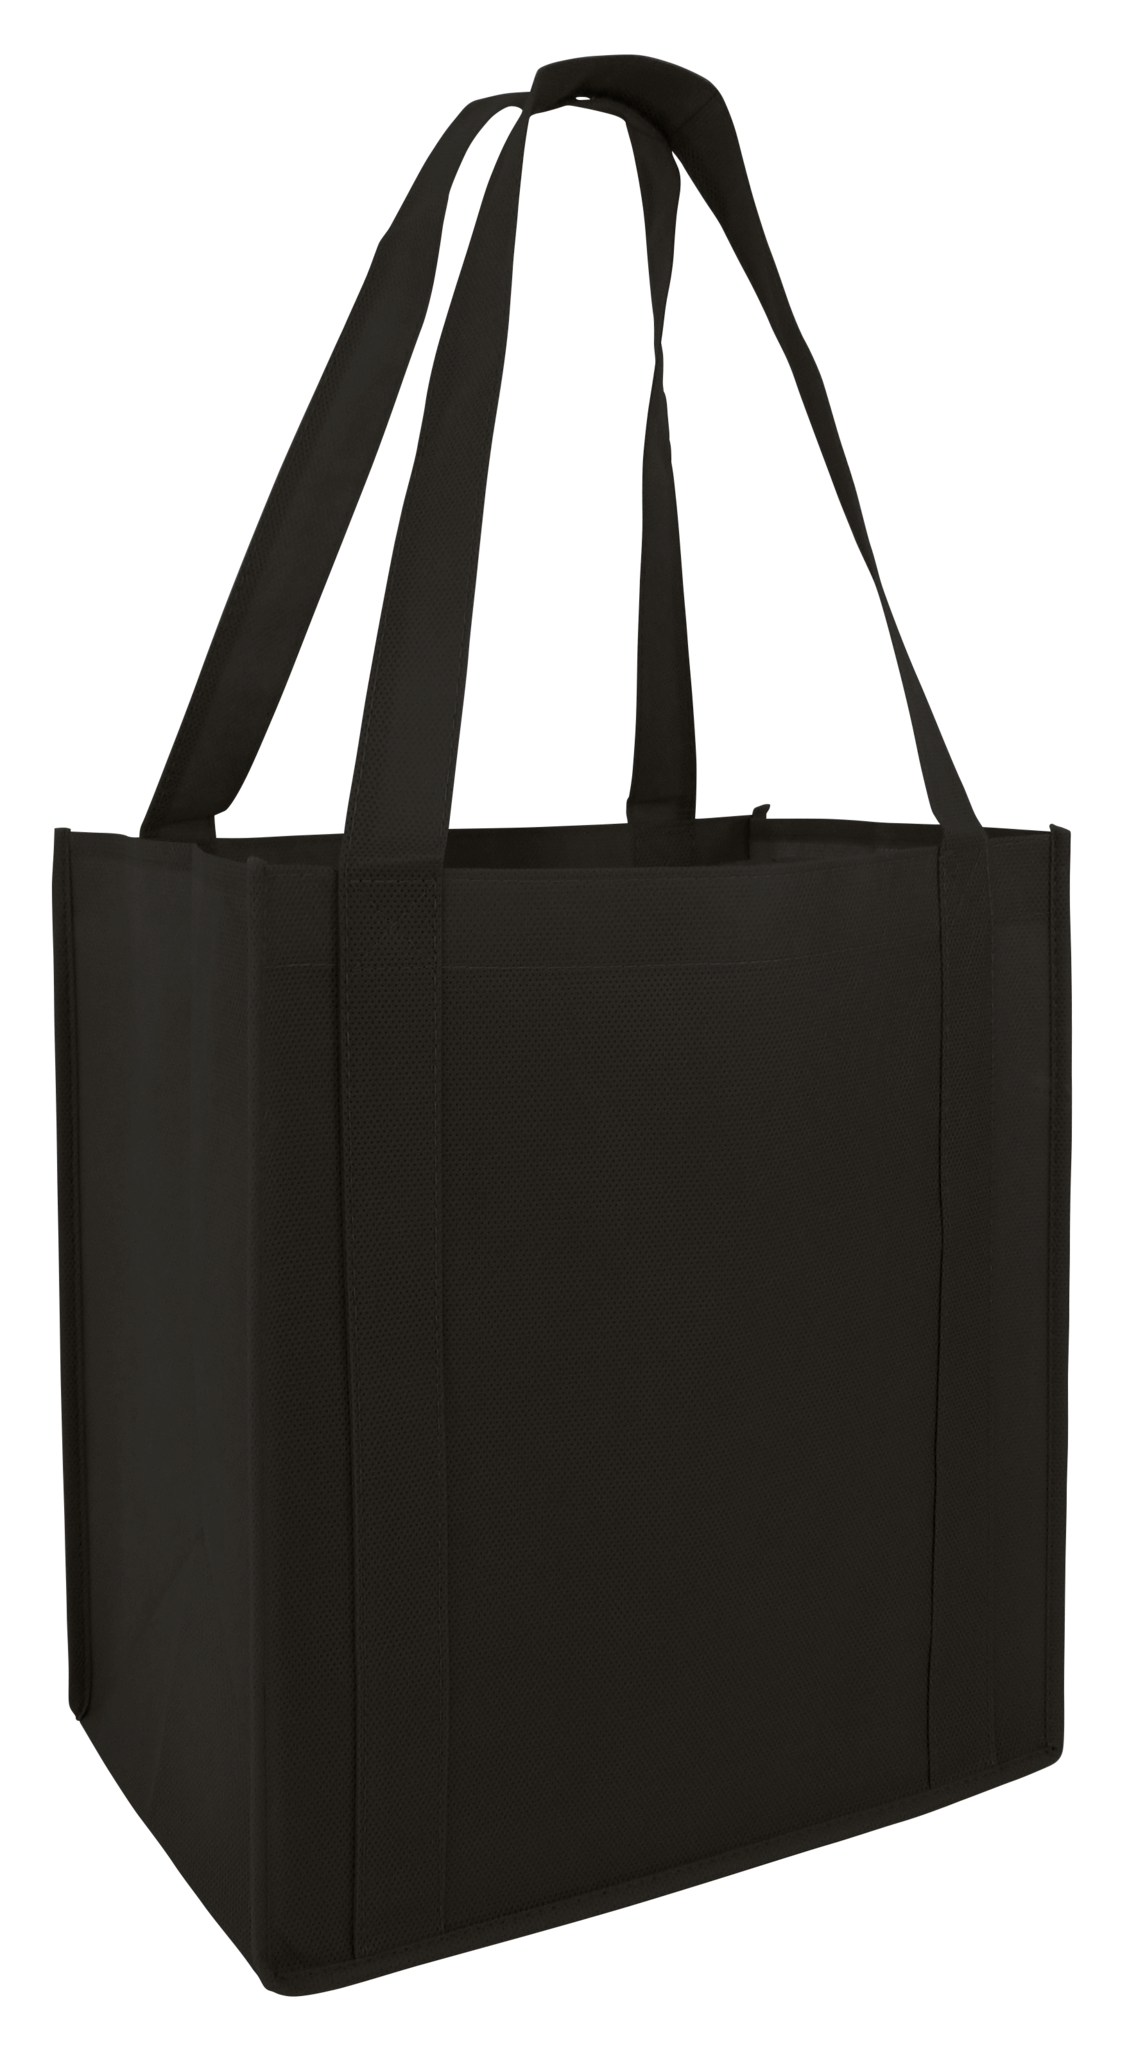 Cheap Grocery Shopping Tote Bag black